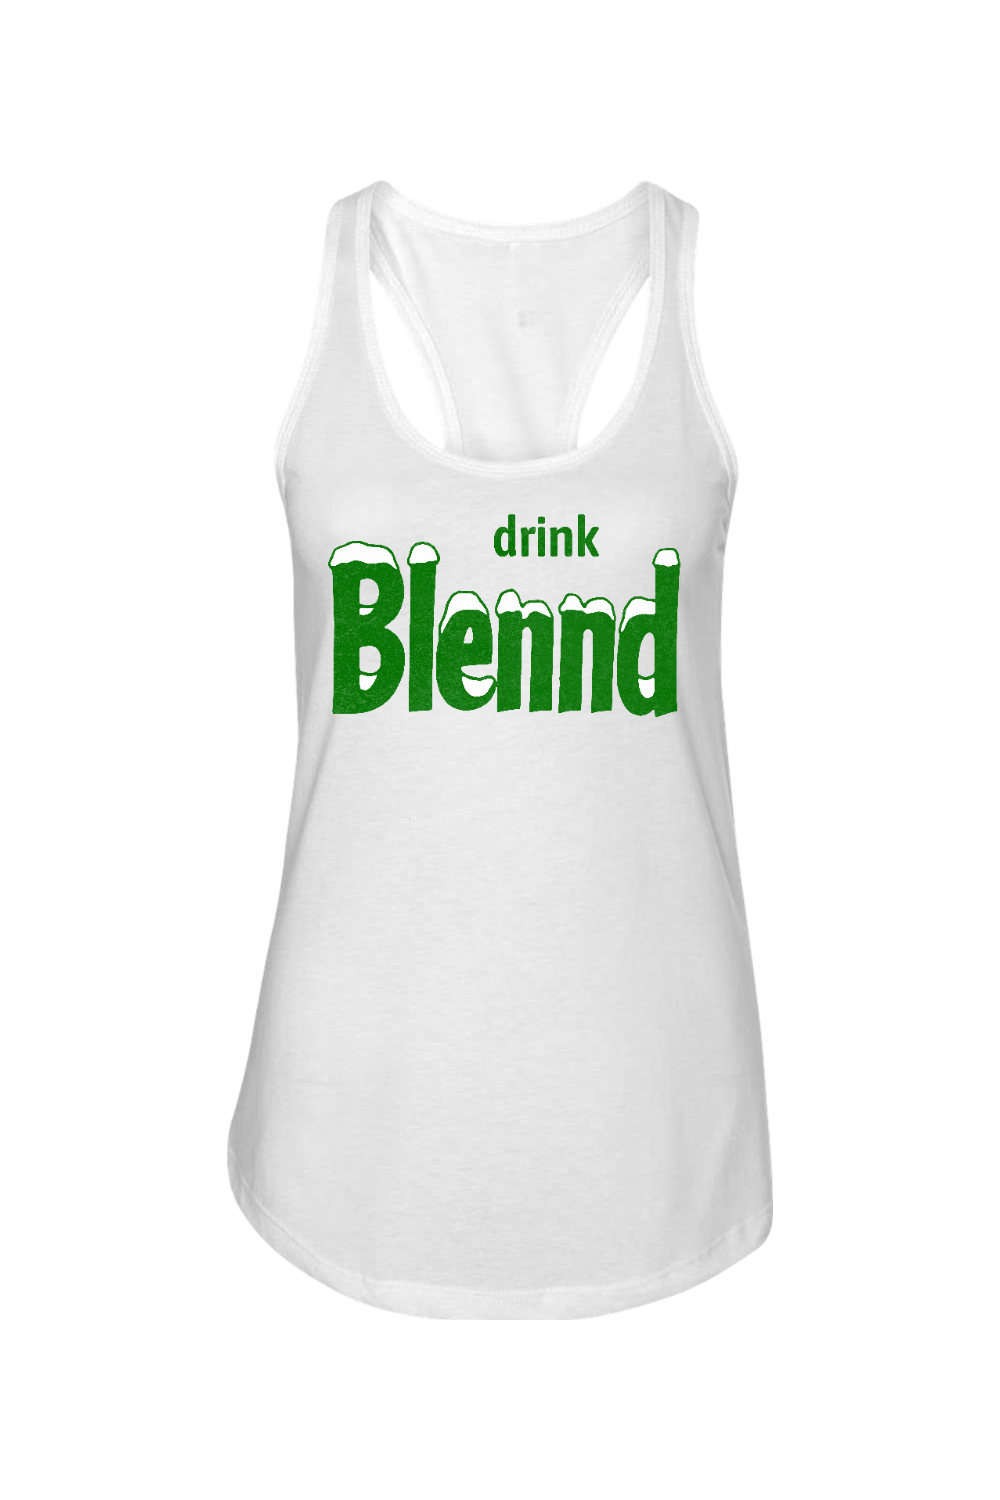 Drink Blennd - Ladies Racerback Tank - Yinzylvania